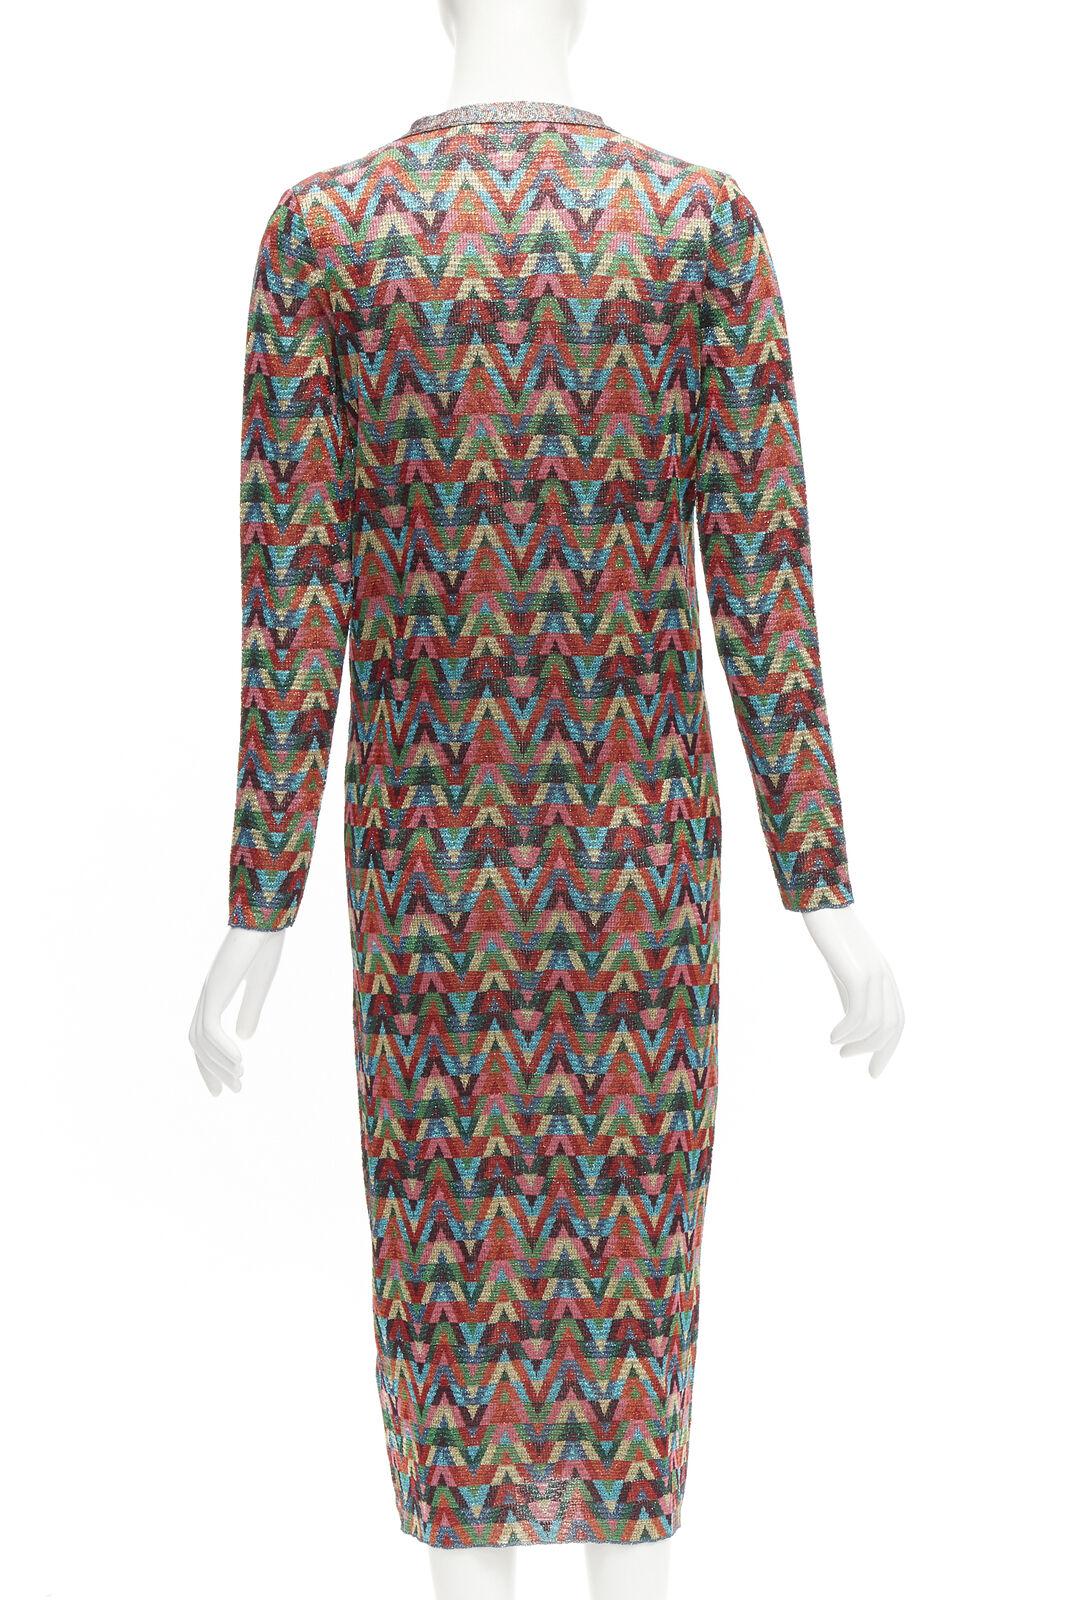 VALENTINO V Optical rainbow metallic lurex graphic long cardigan robe dress XS For Sale 2